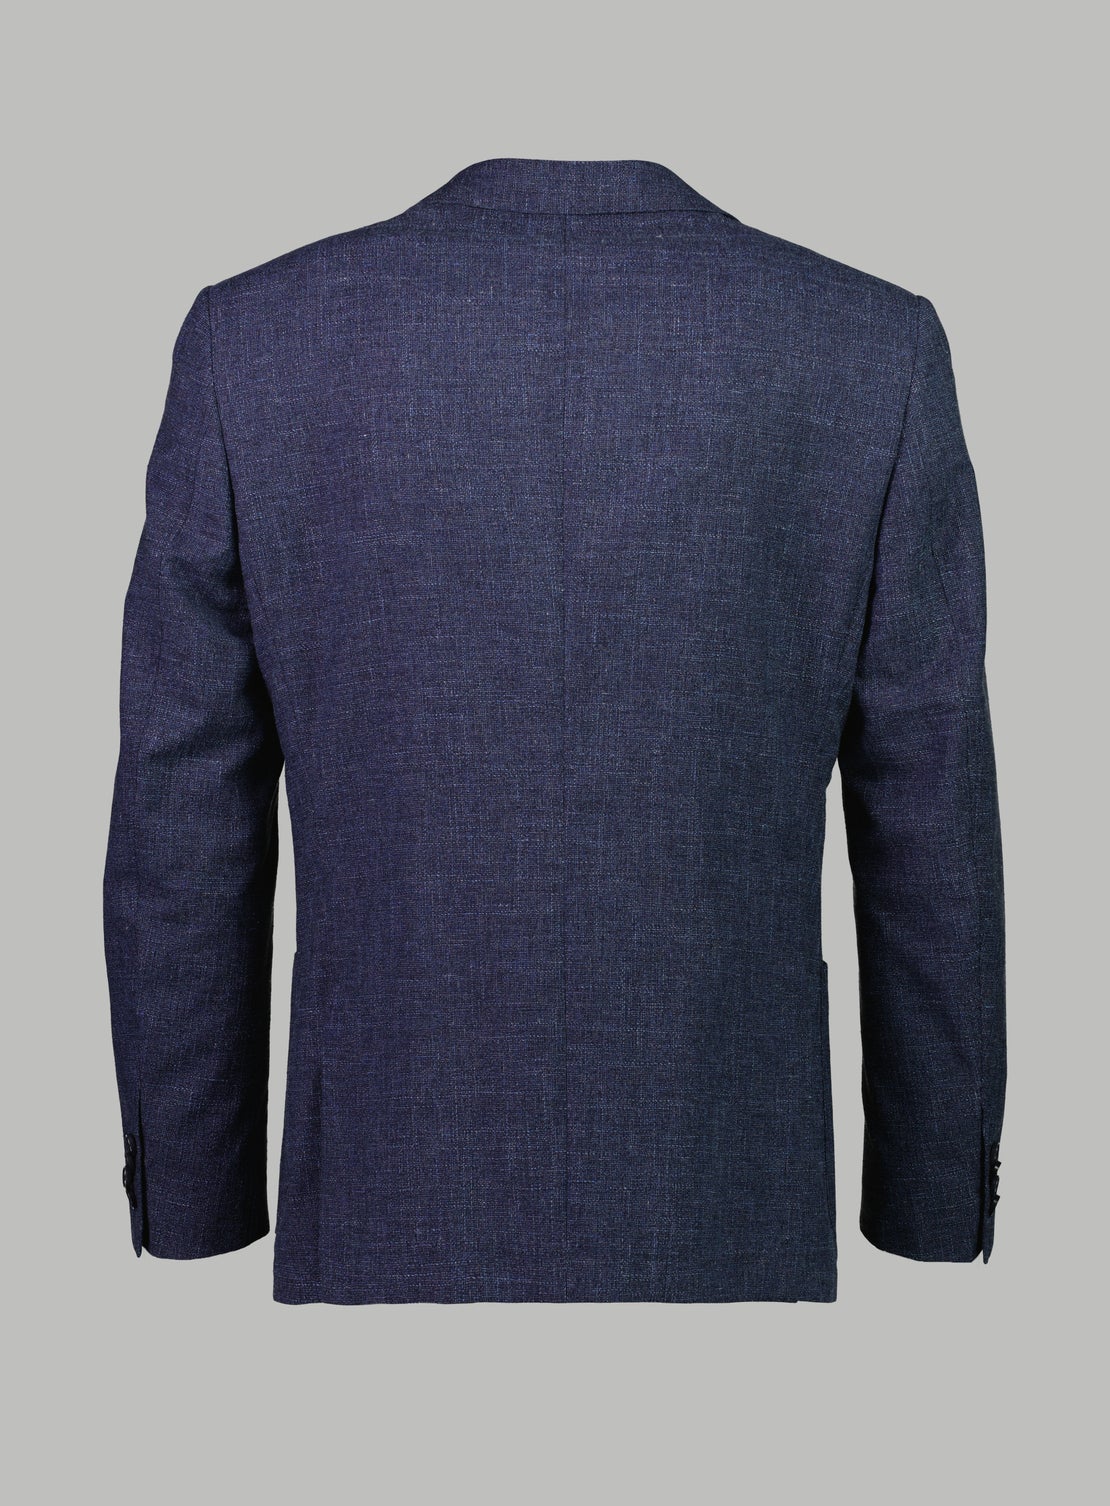 Lagos Denim Textured Jacket